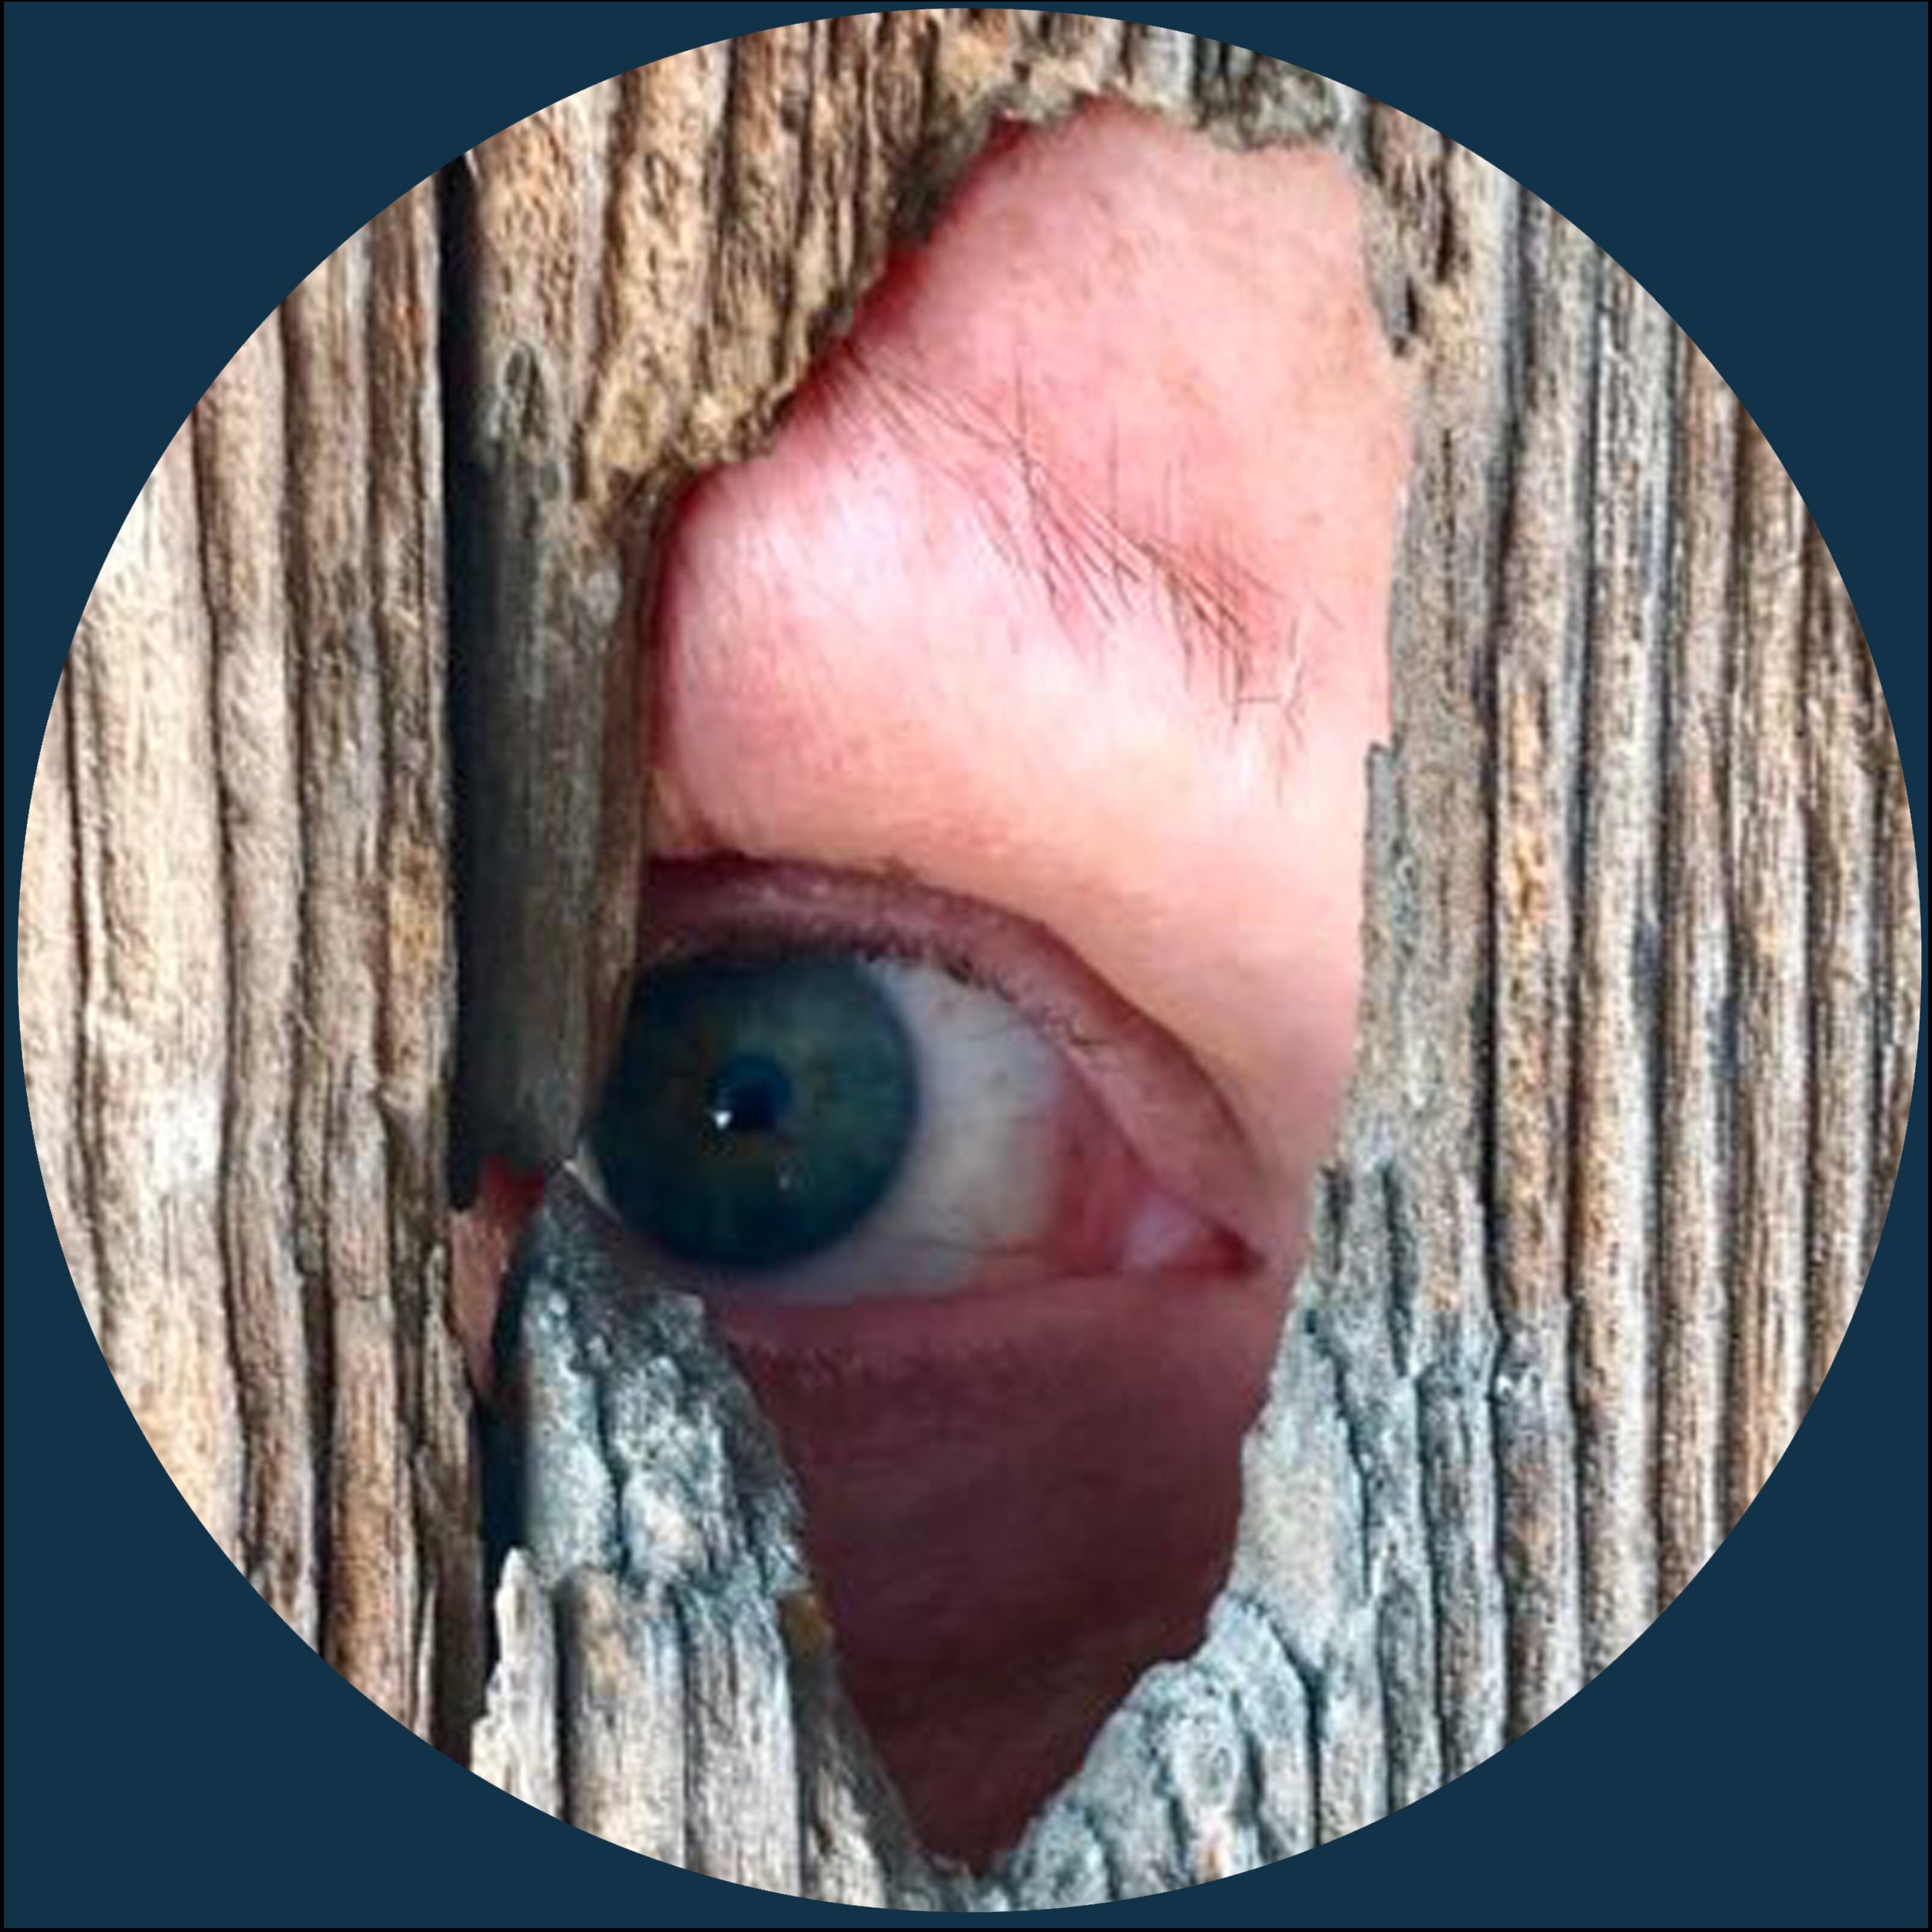 A round photo showing Judith Watts' eye peering through a peephole